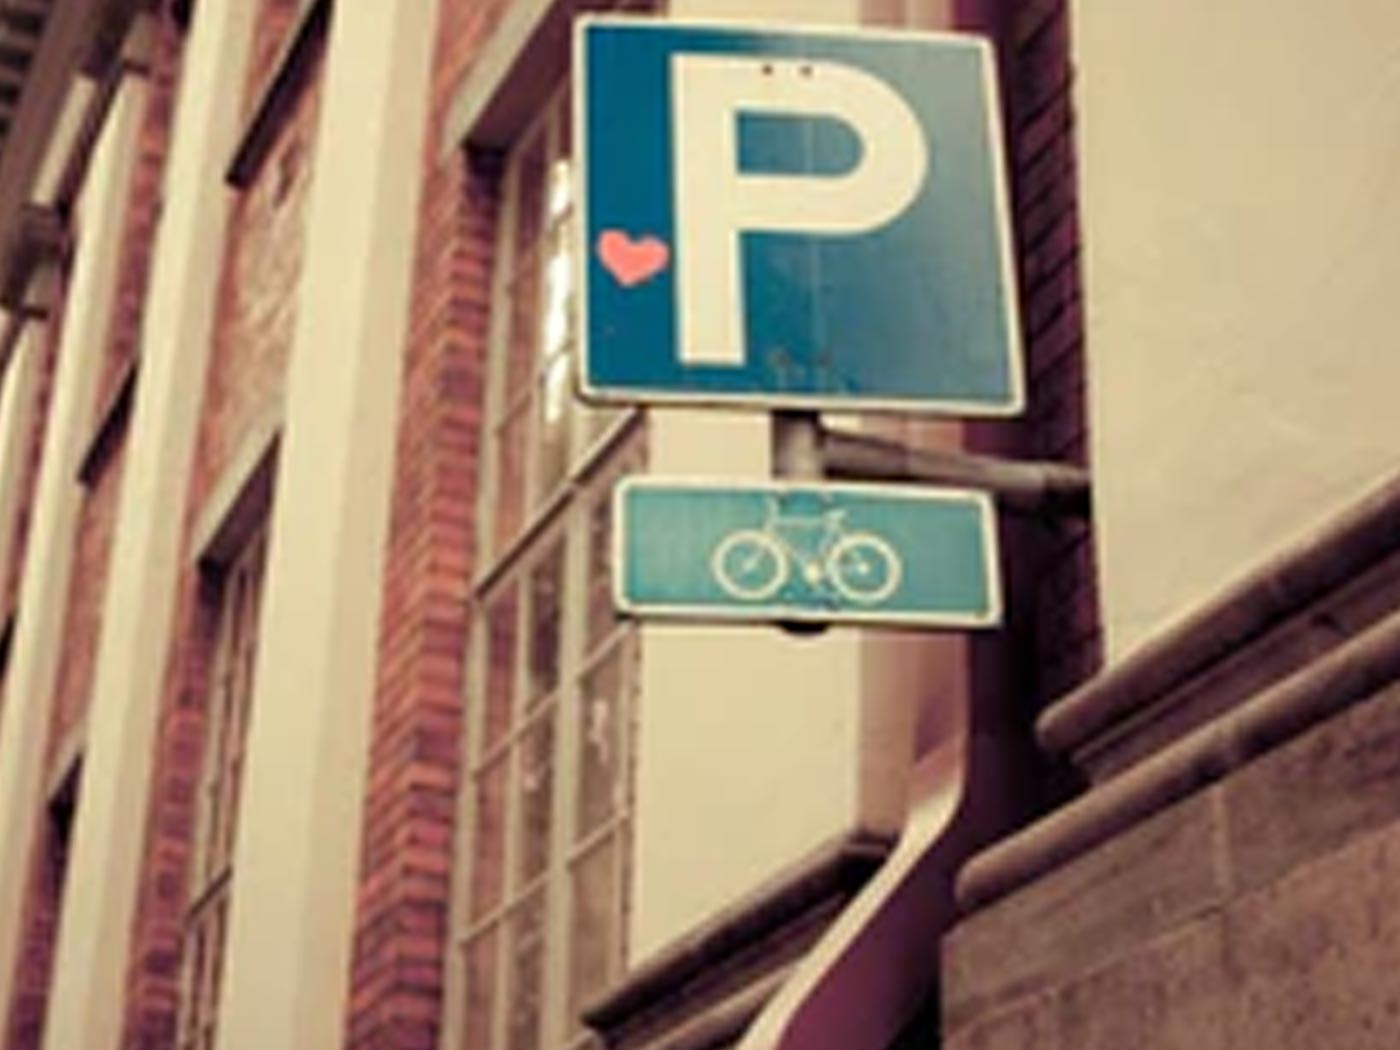 Is Parking Keeping Us Apart?